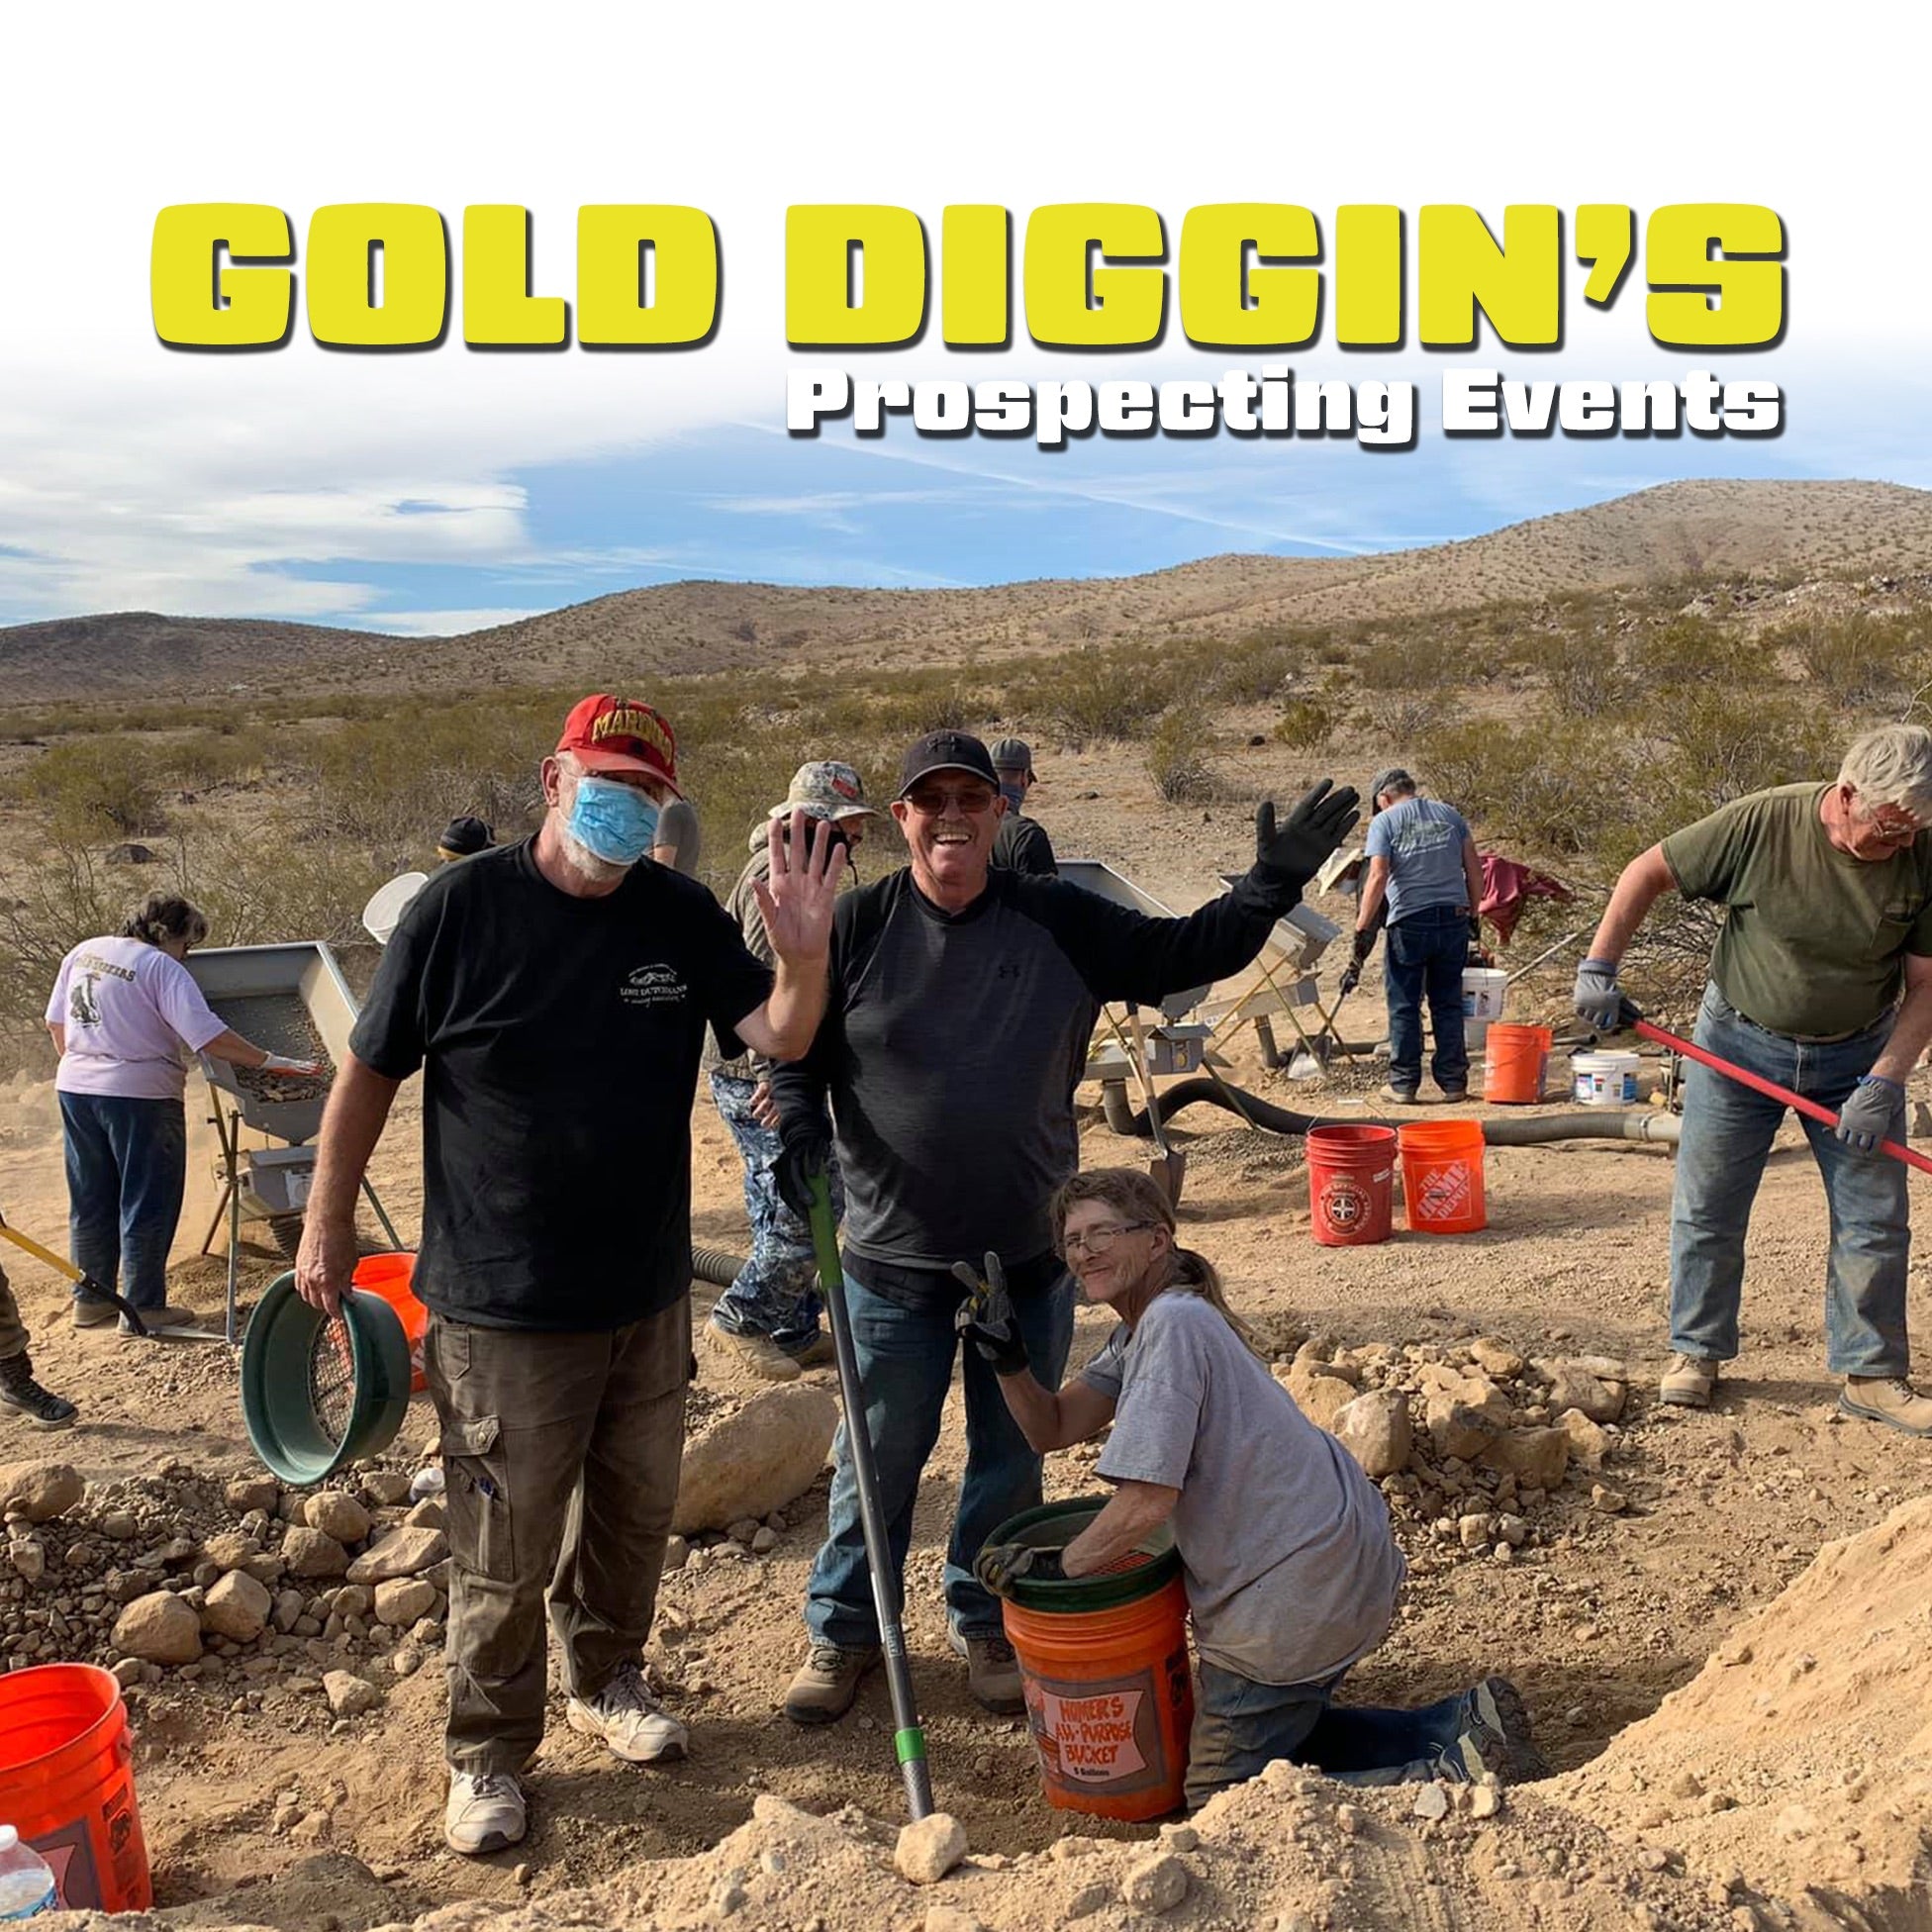 LDMA Dinner set for Las Vegas this April - Gold Prospectors